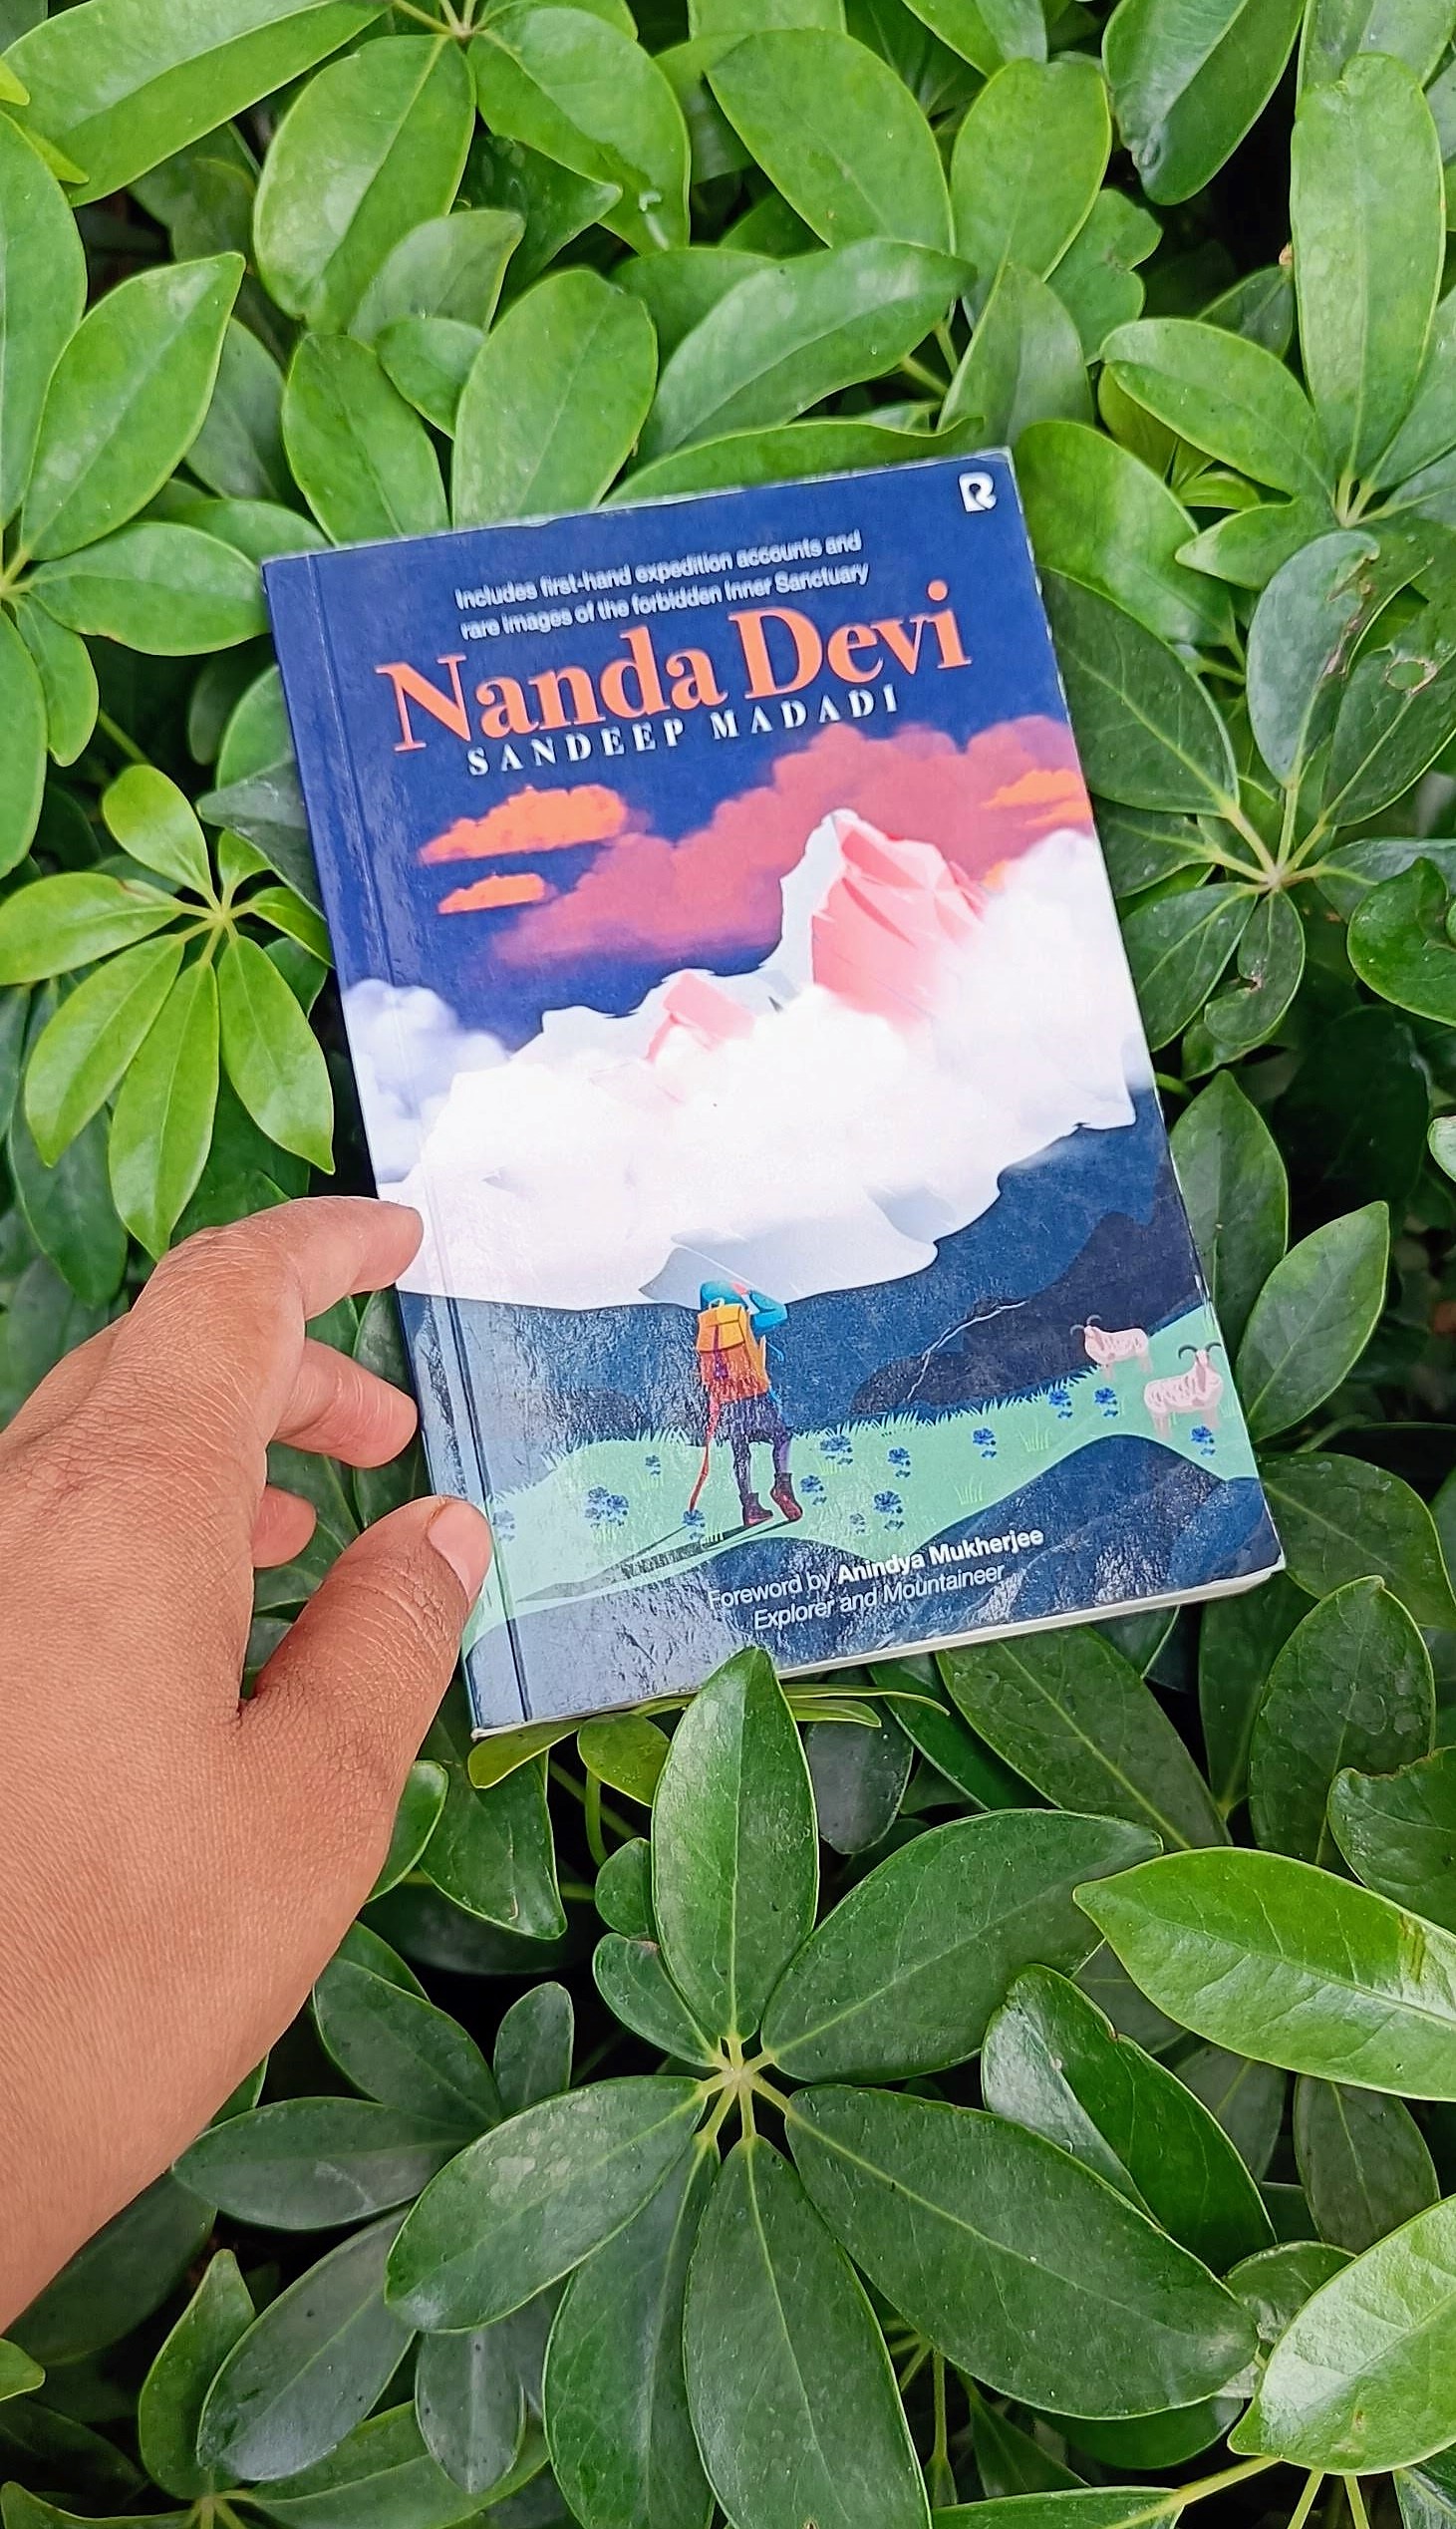 Nanda Devi by Sandeep Madadi #Bookreview